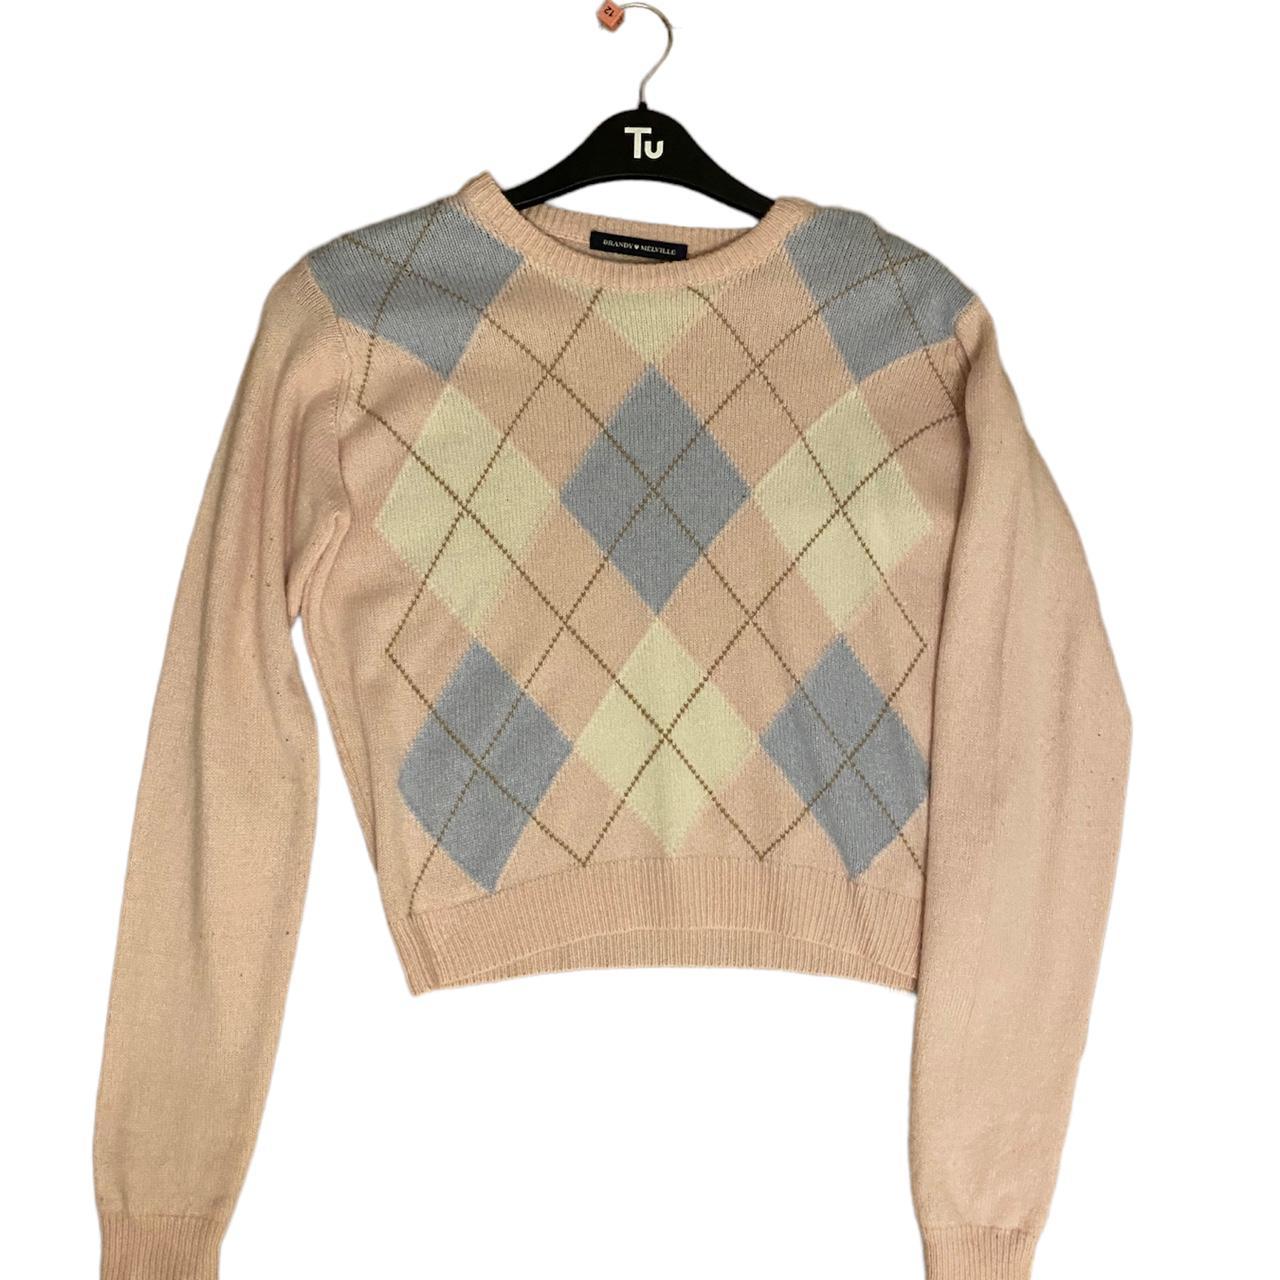 Brandy Melville Abi Sweater, checkered argyle style.... - Depop